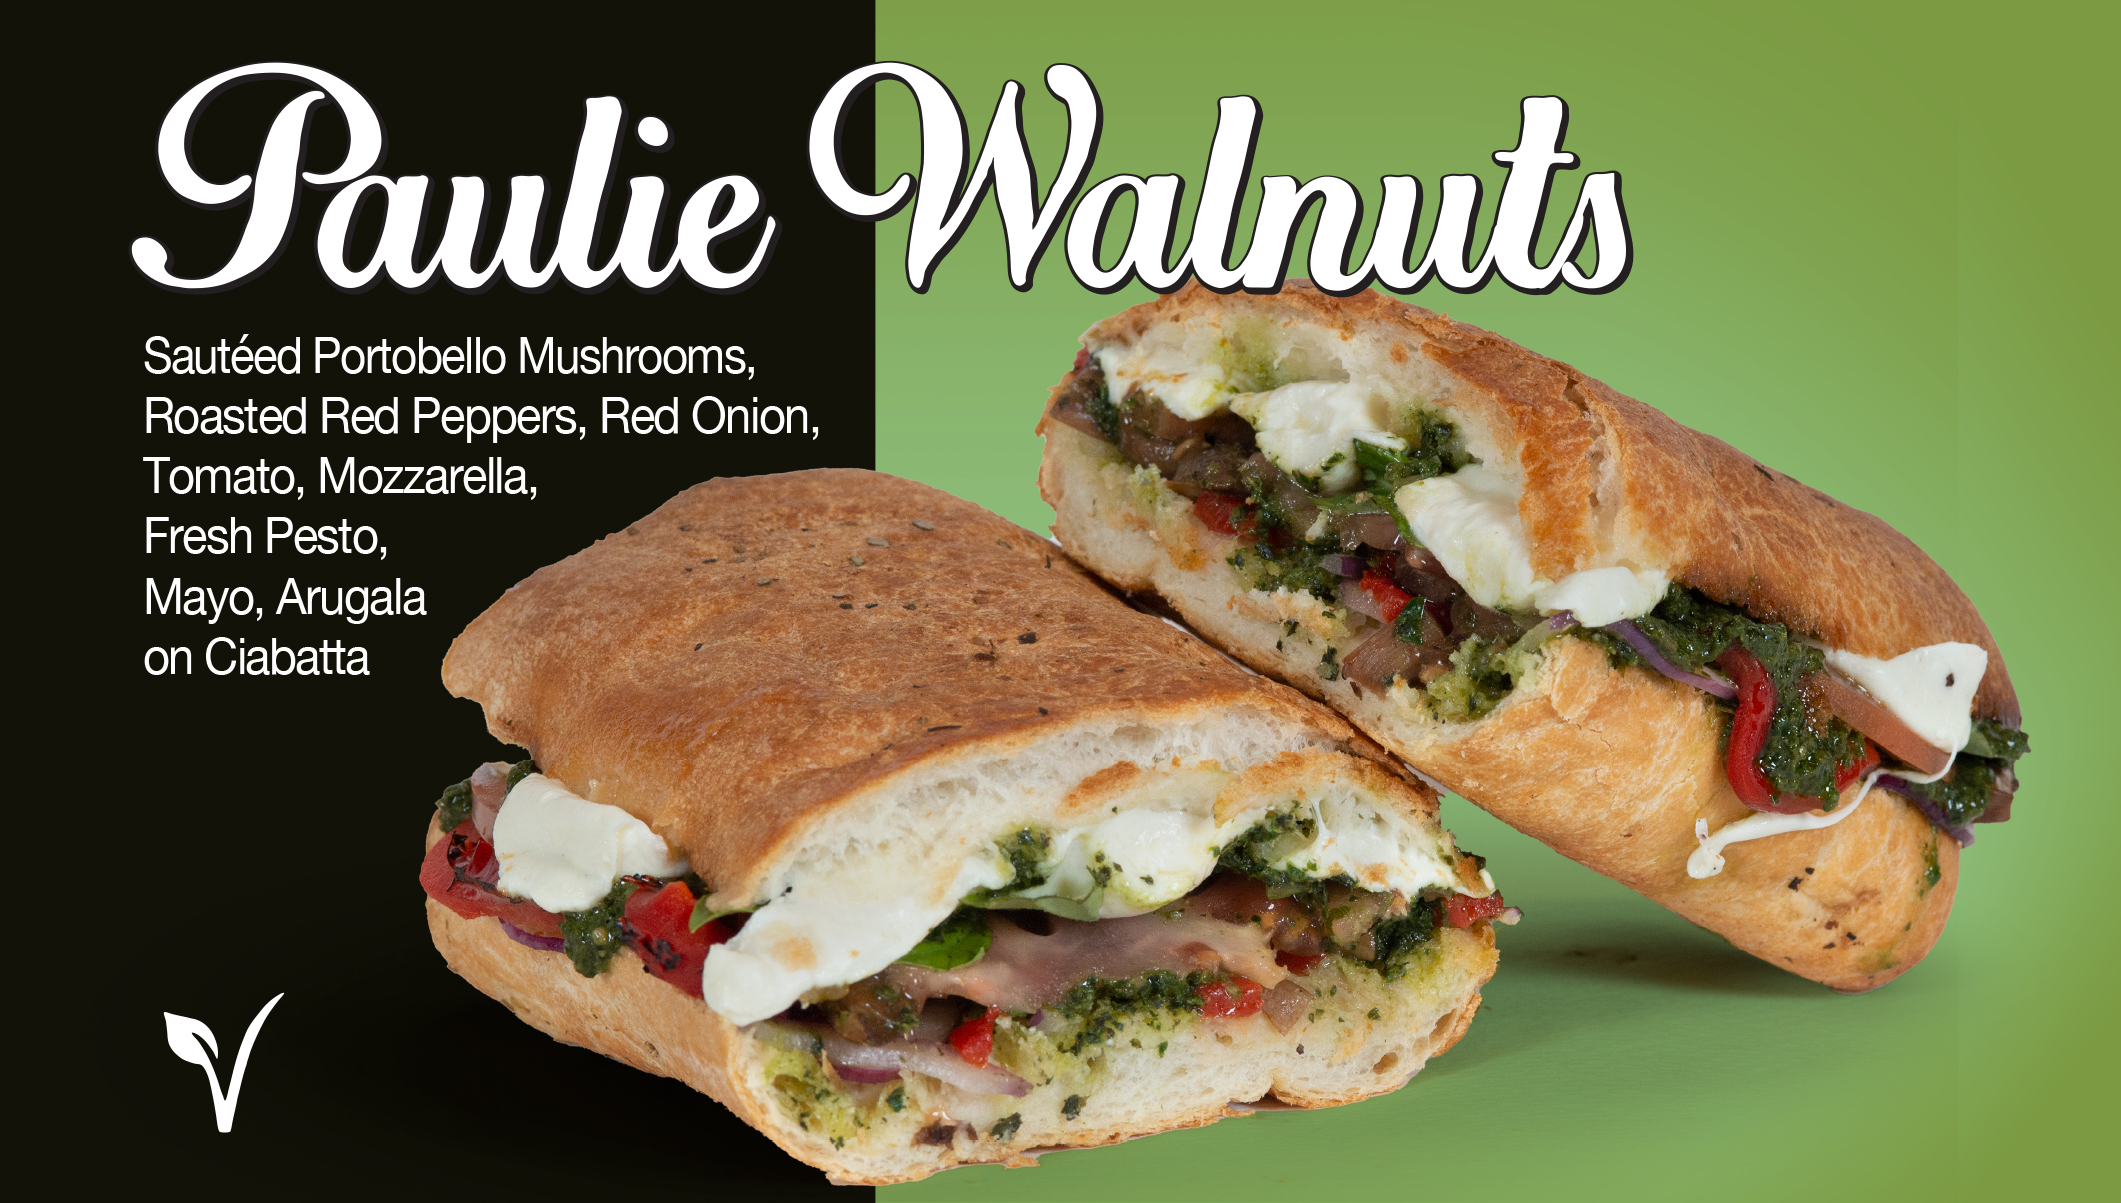 Paulie Walnuts Sandwich photo